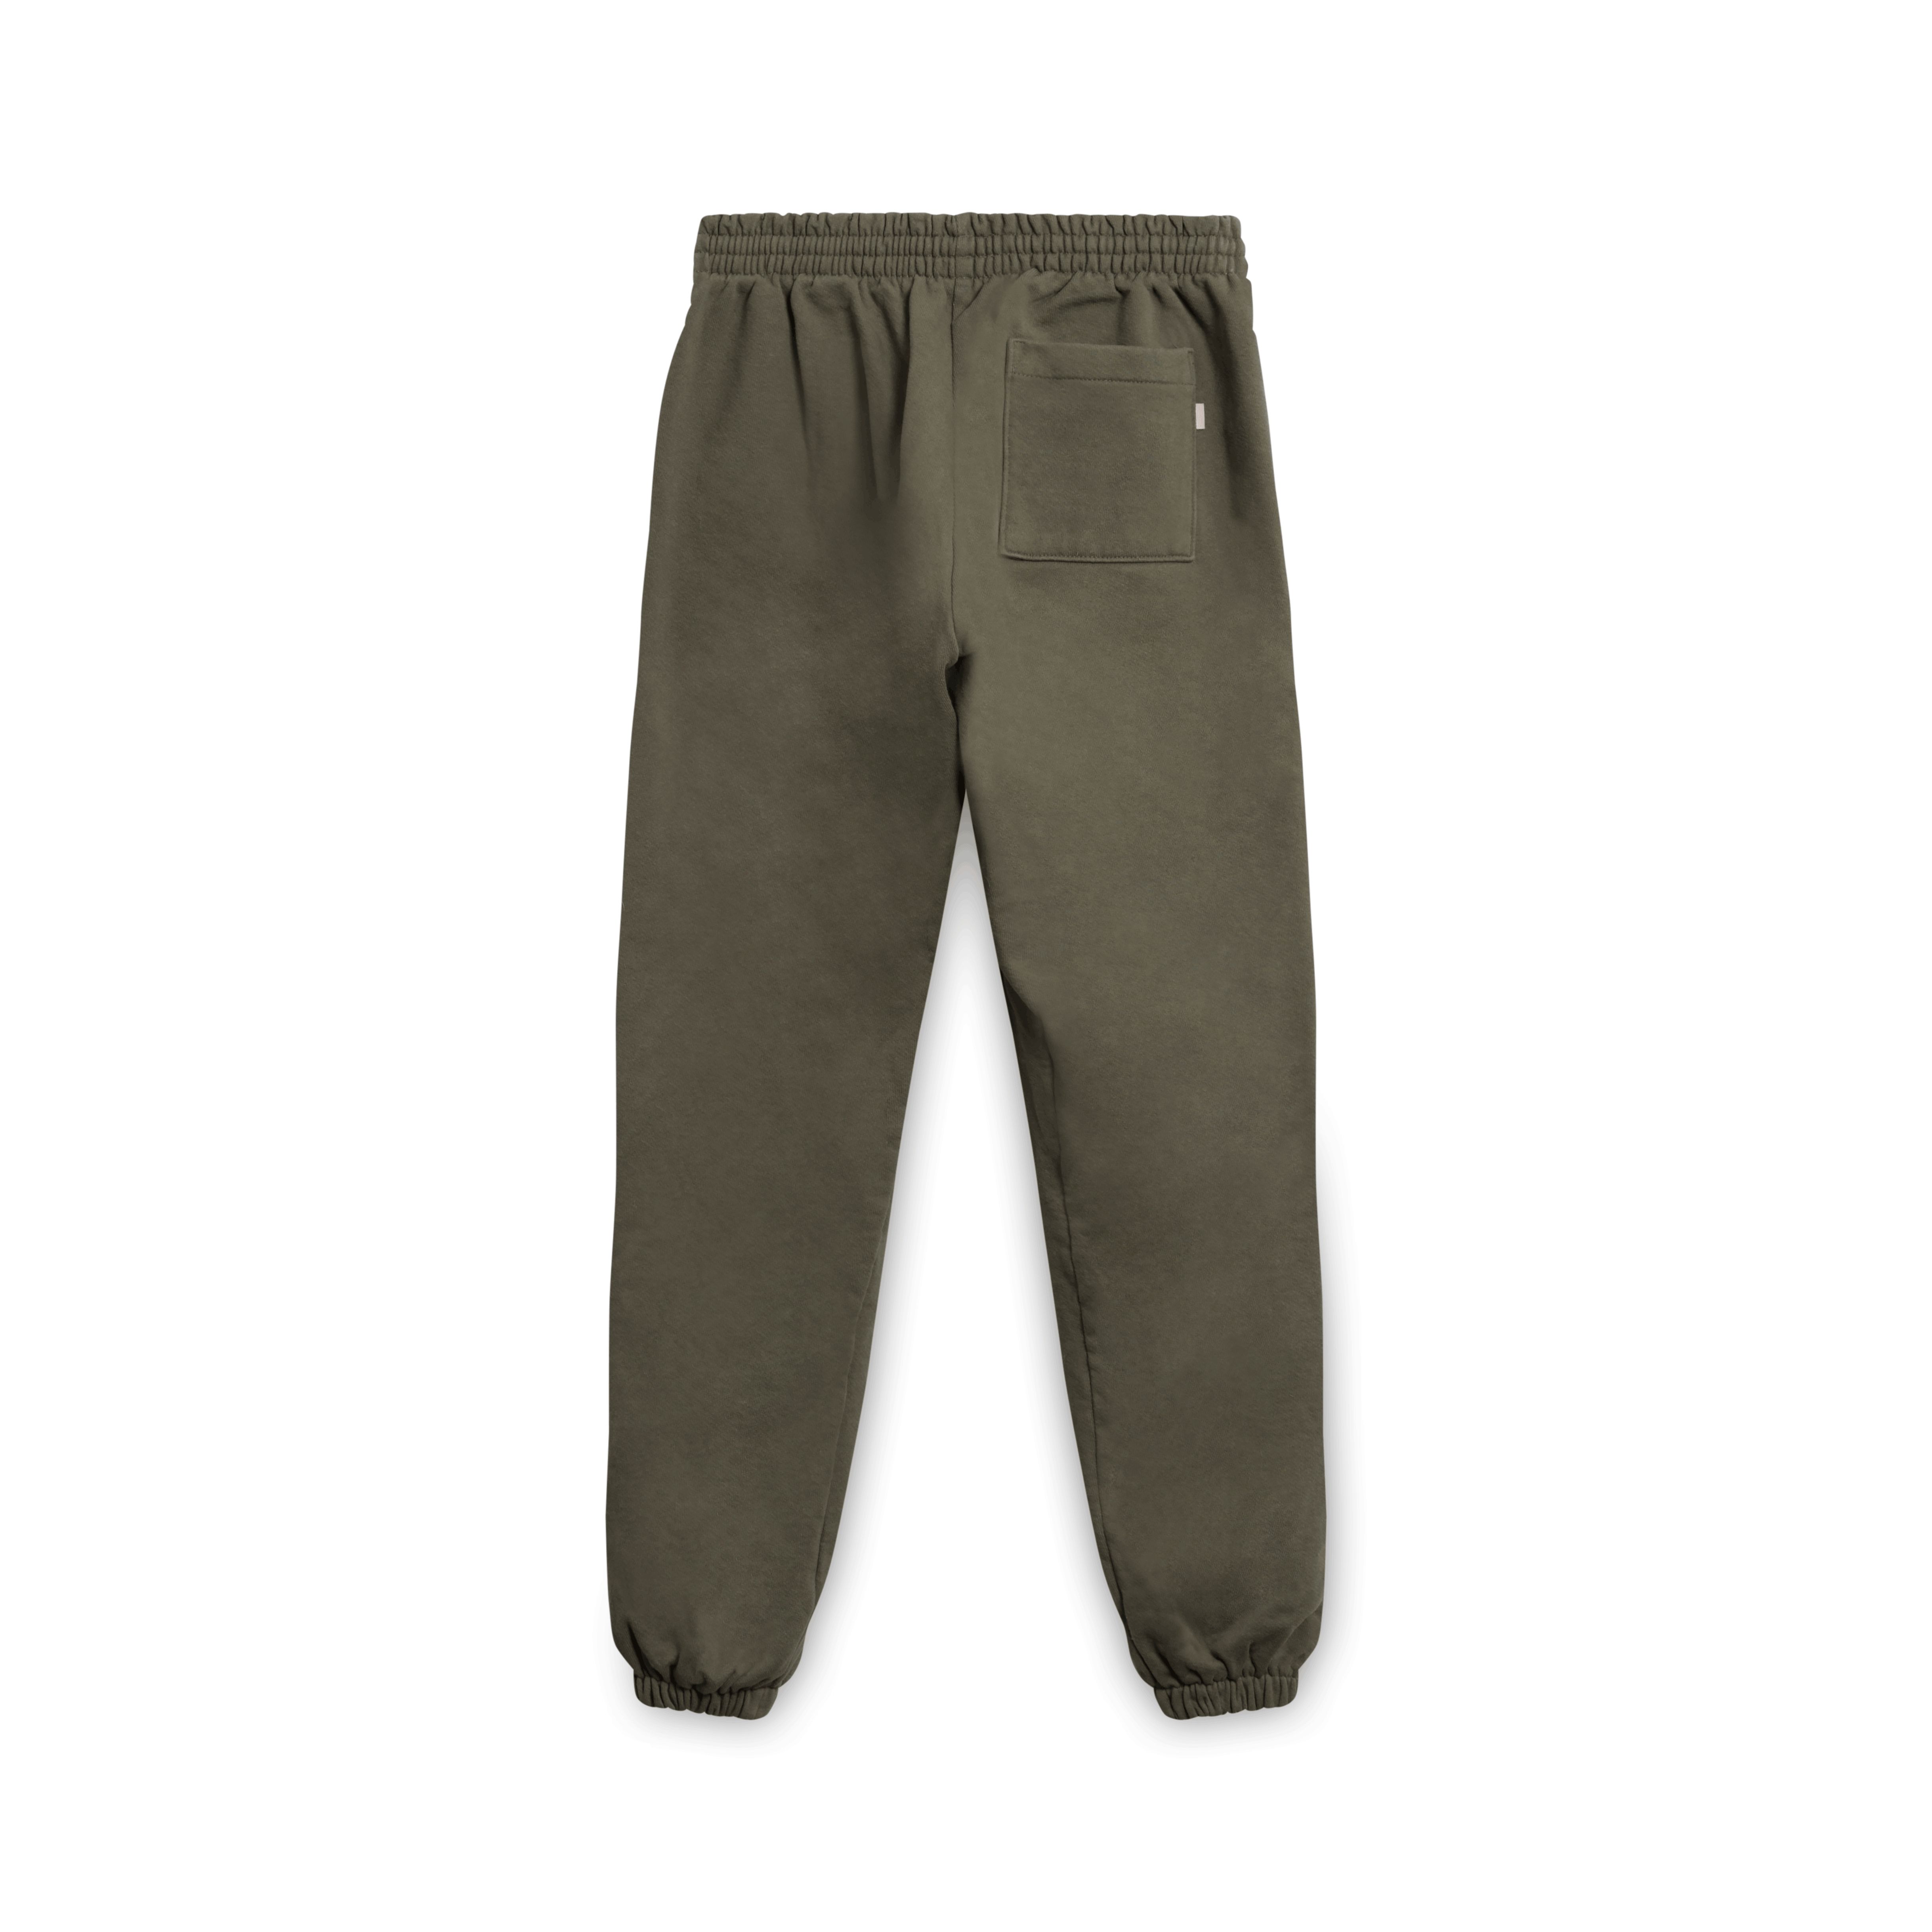 JJJJound J/95 Sweatpants - Utility Green by Becky Hearn | Basic.Space